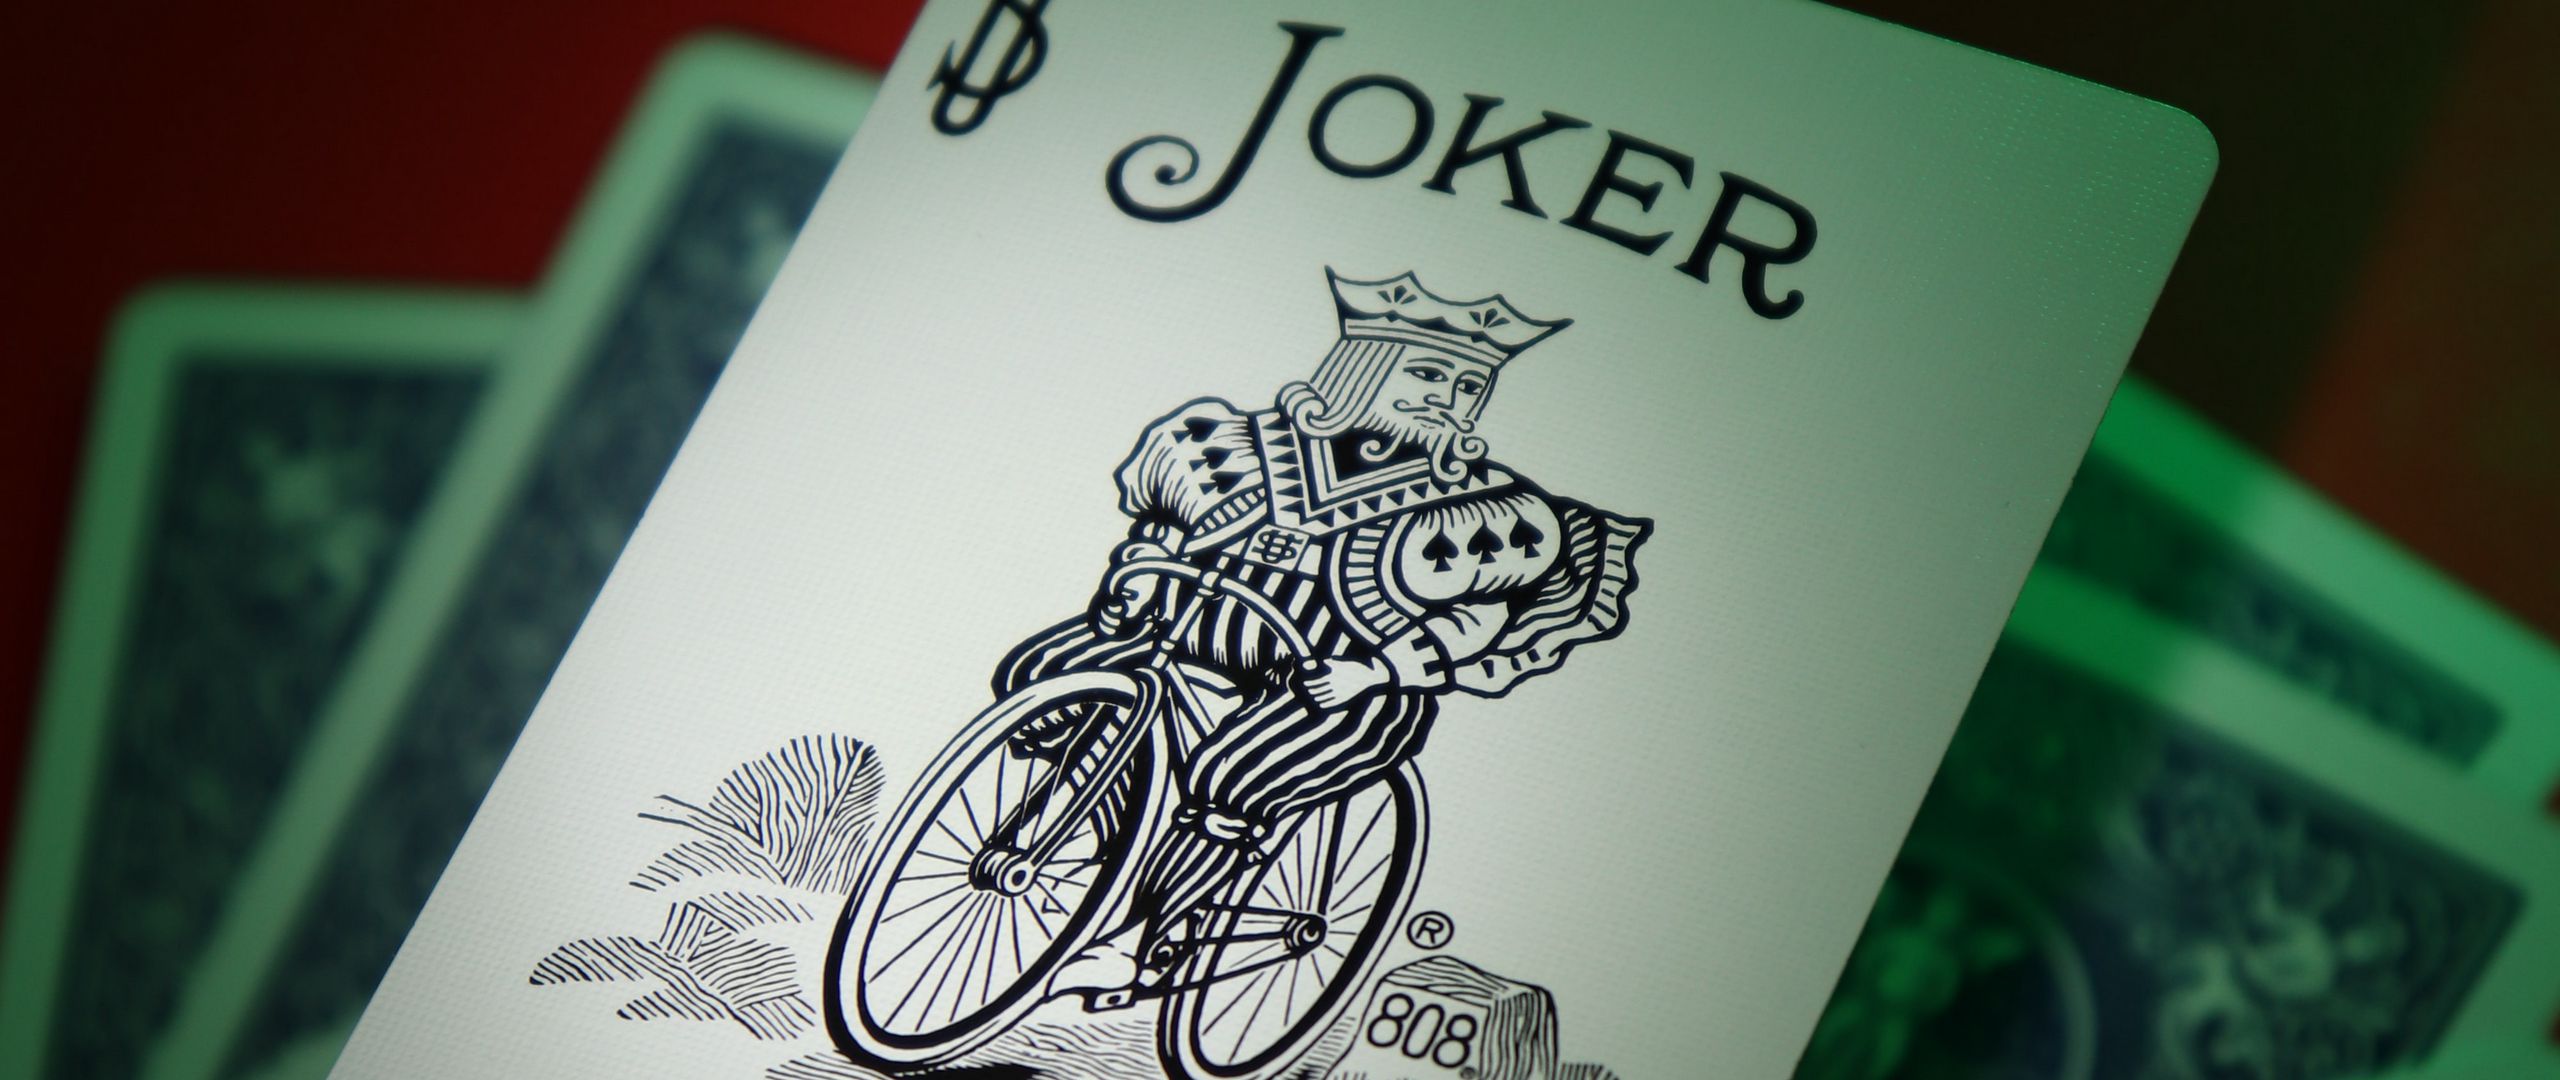 2560x1080 Wallpaper joker, word, inscription, cards